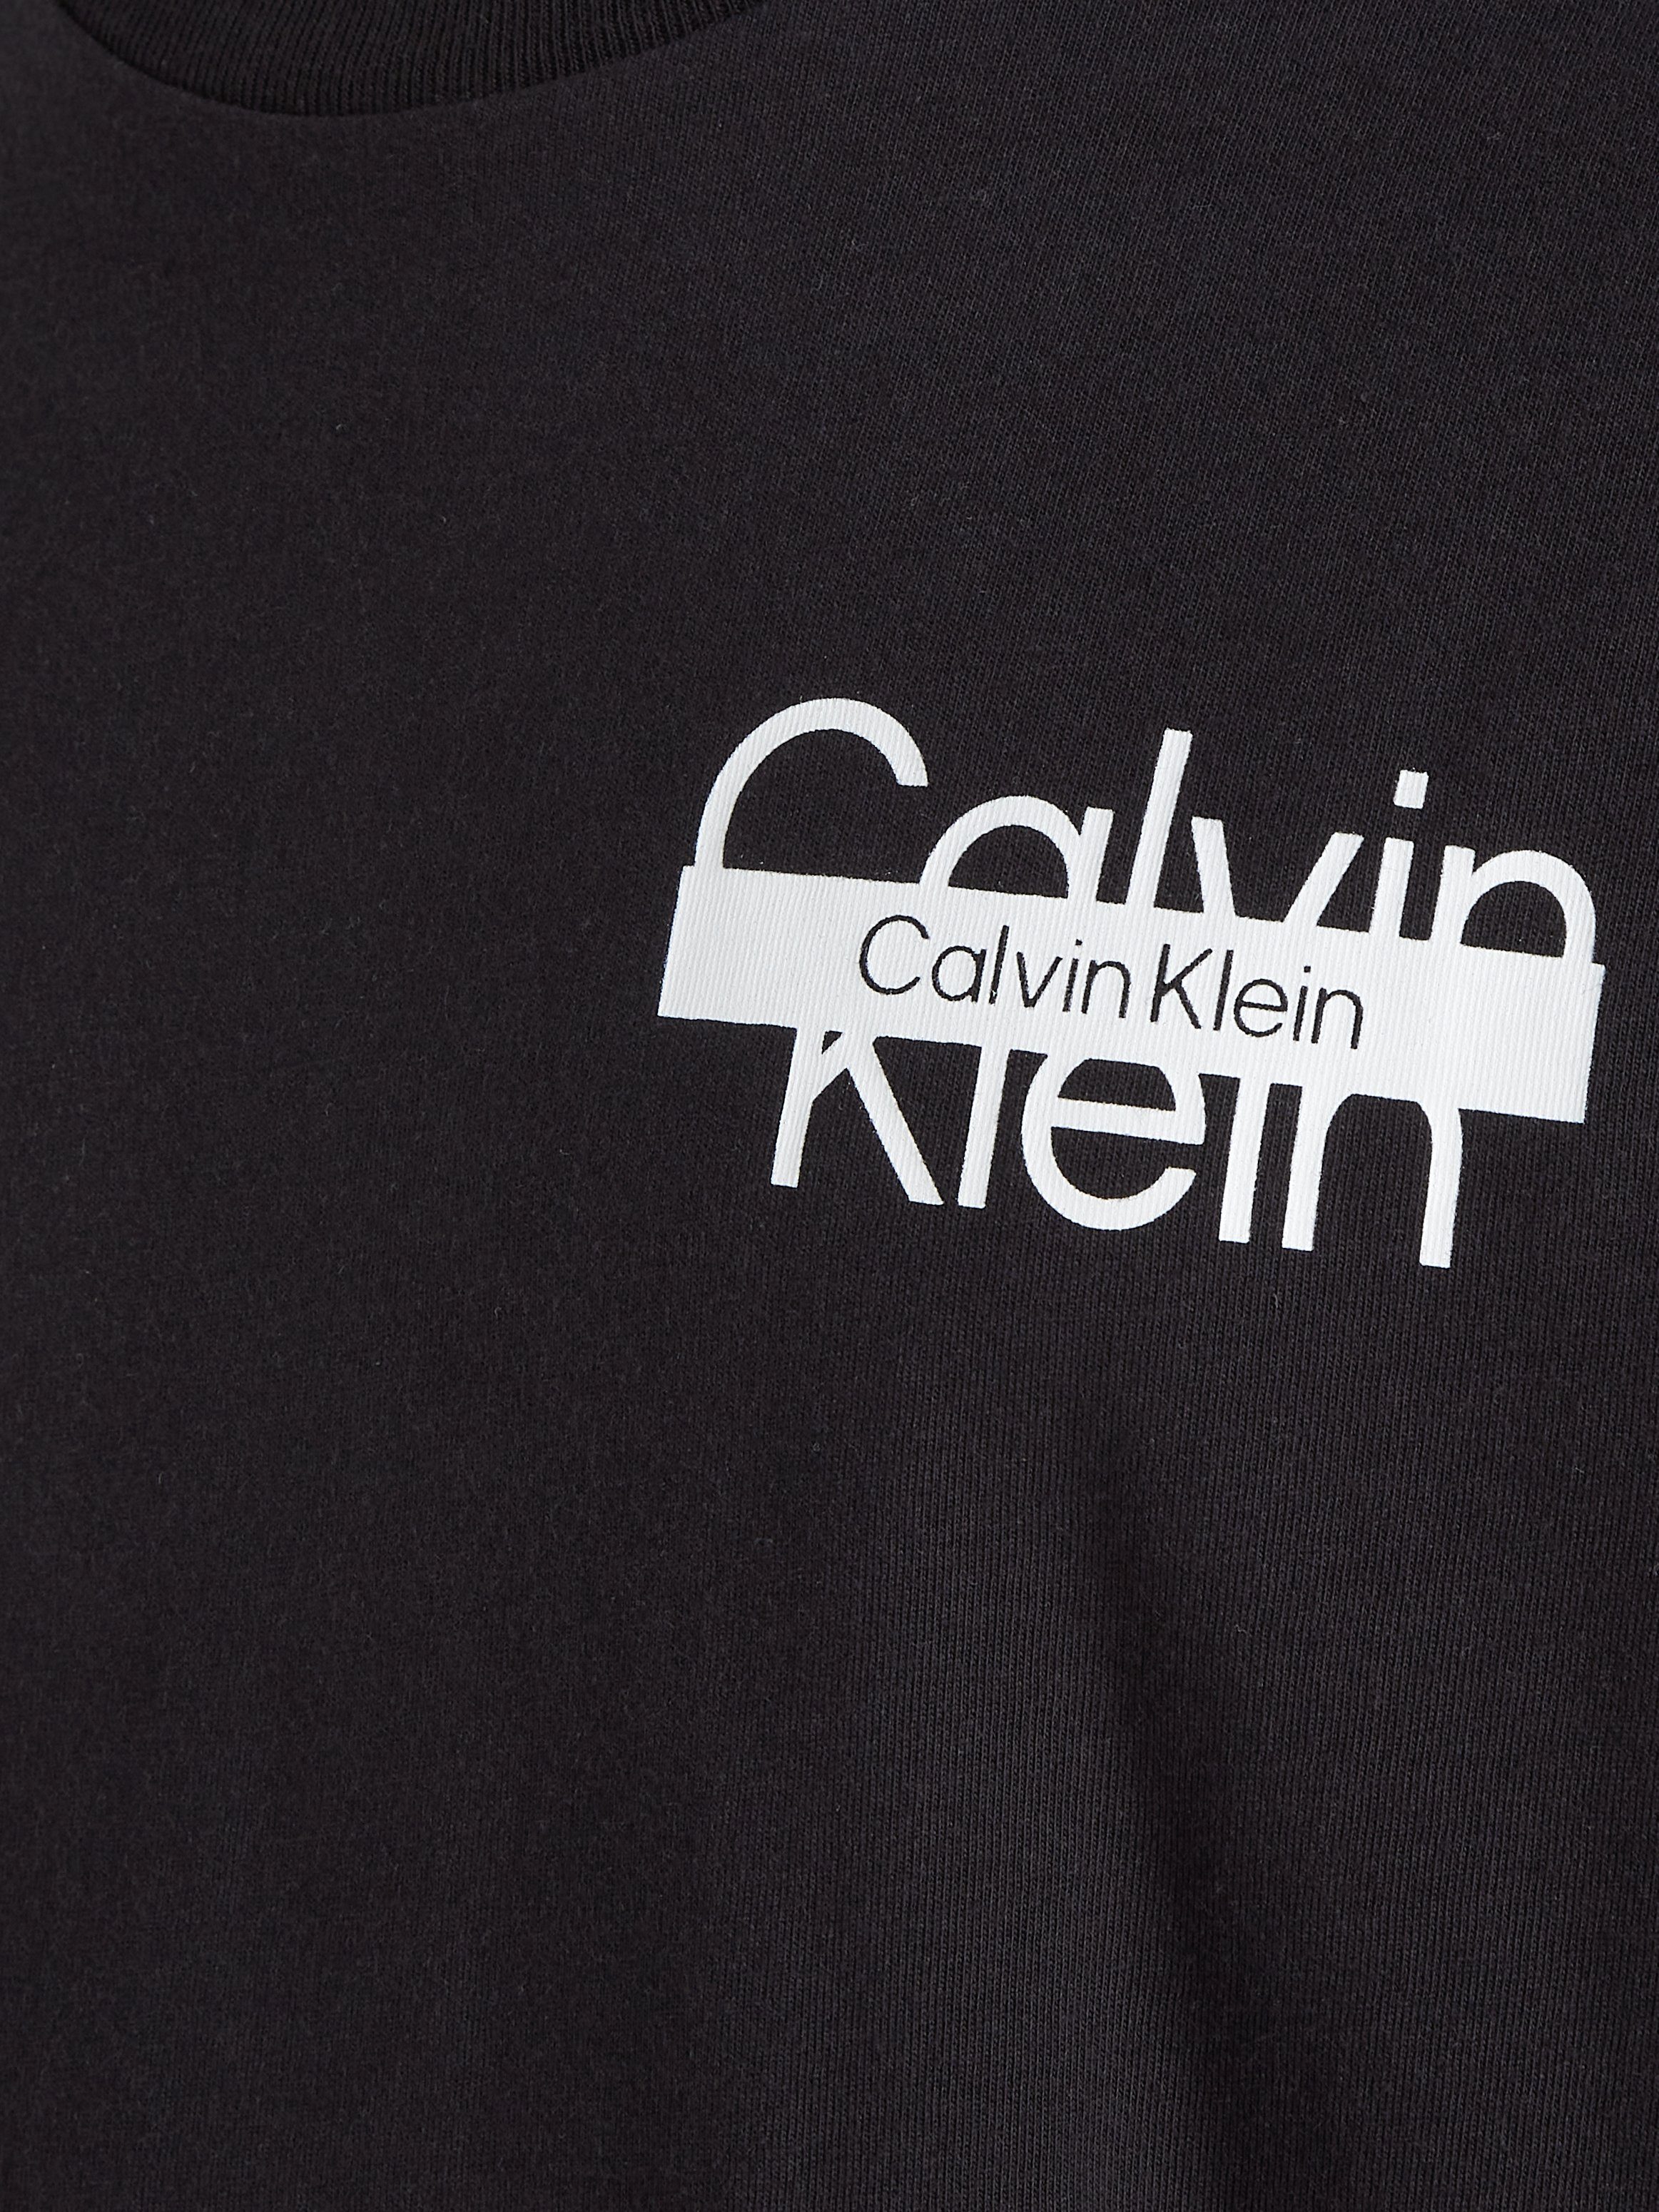 LS Calvin Klein LOGO THROUGH Black T-SHIRT Ck CUT Langarmshirt